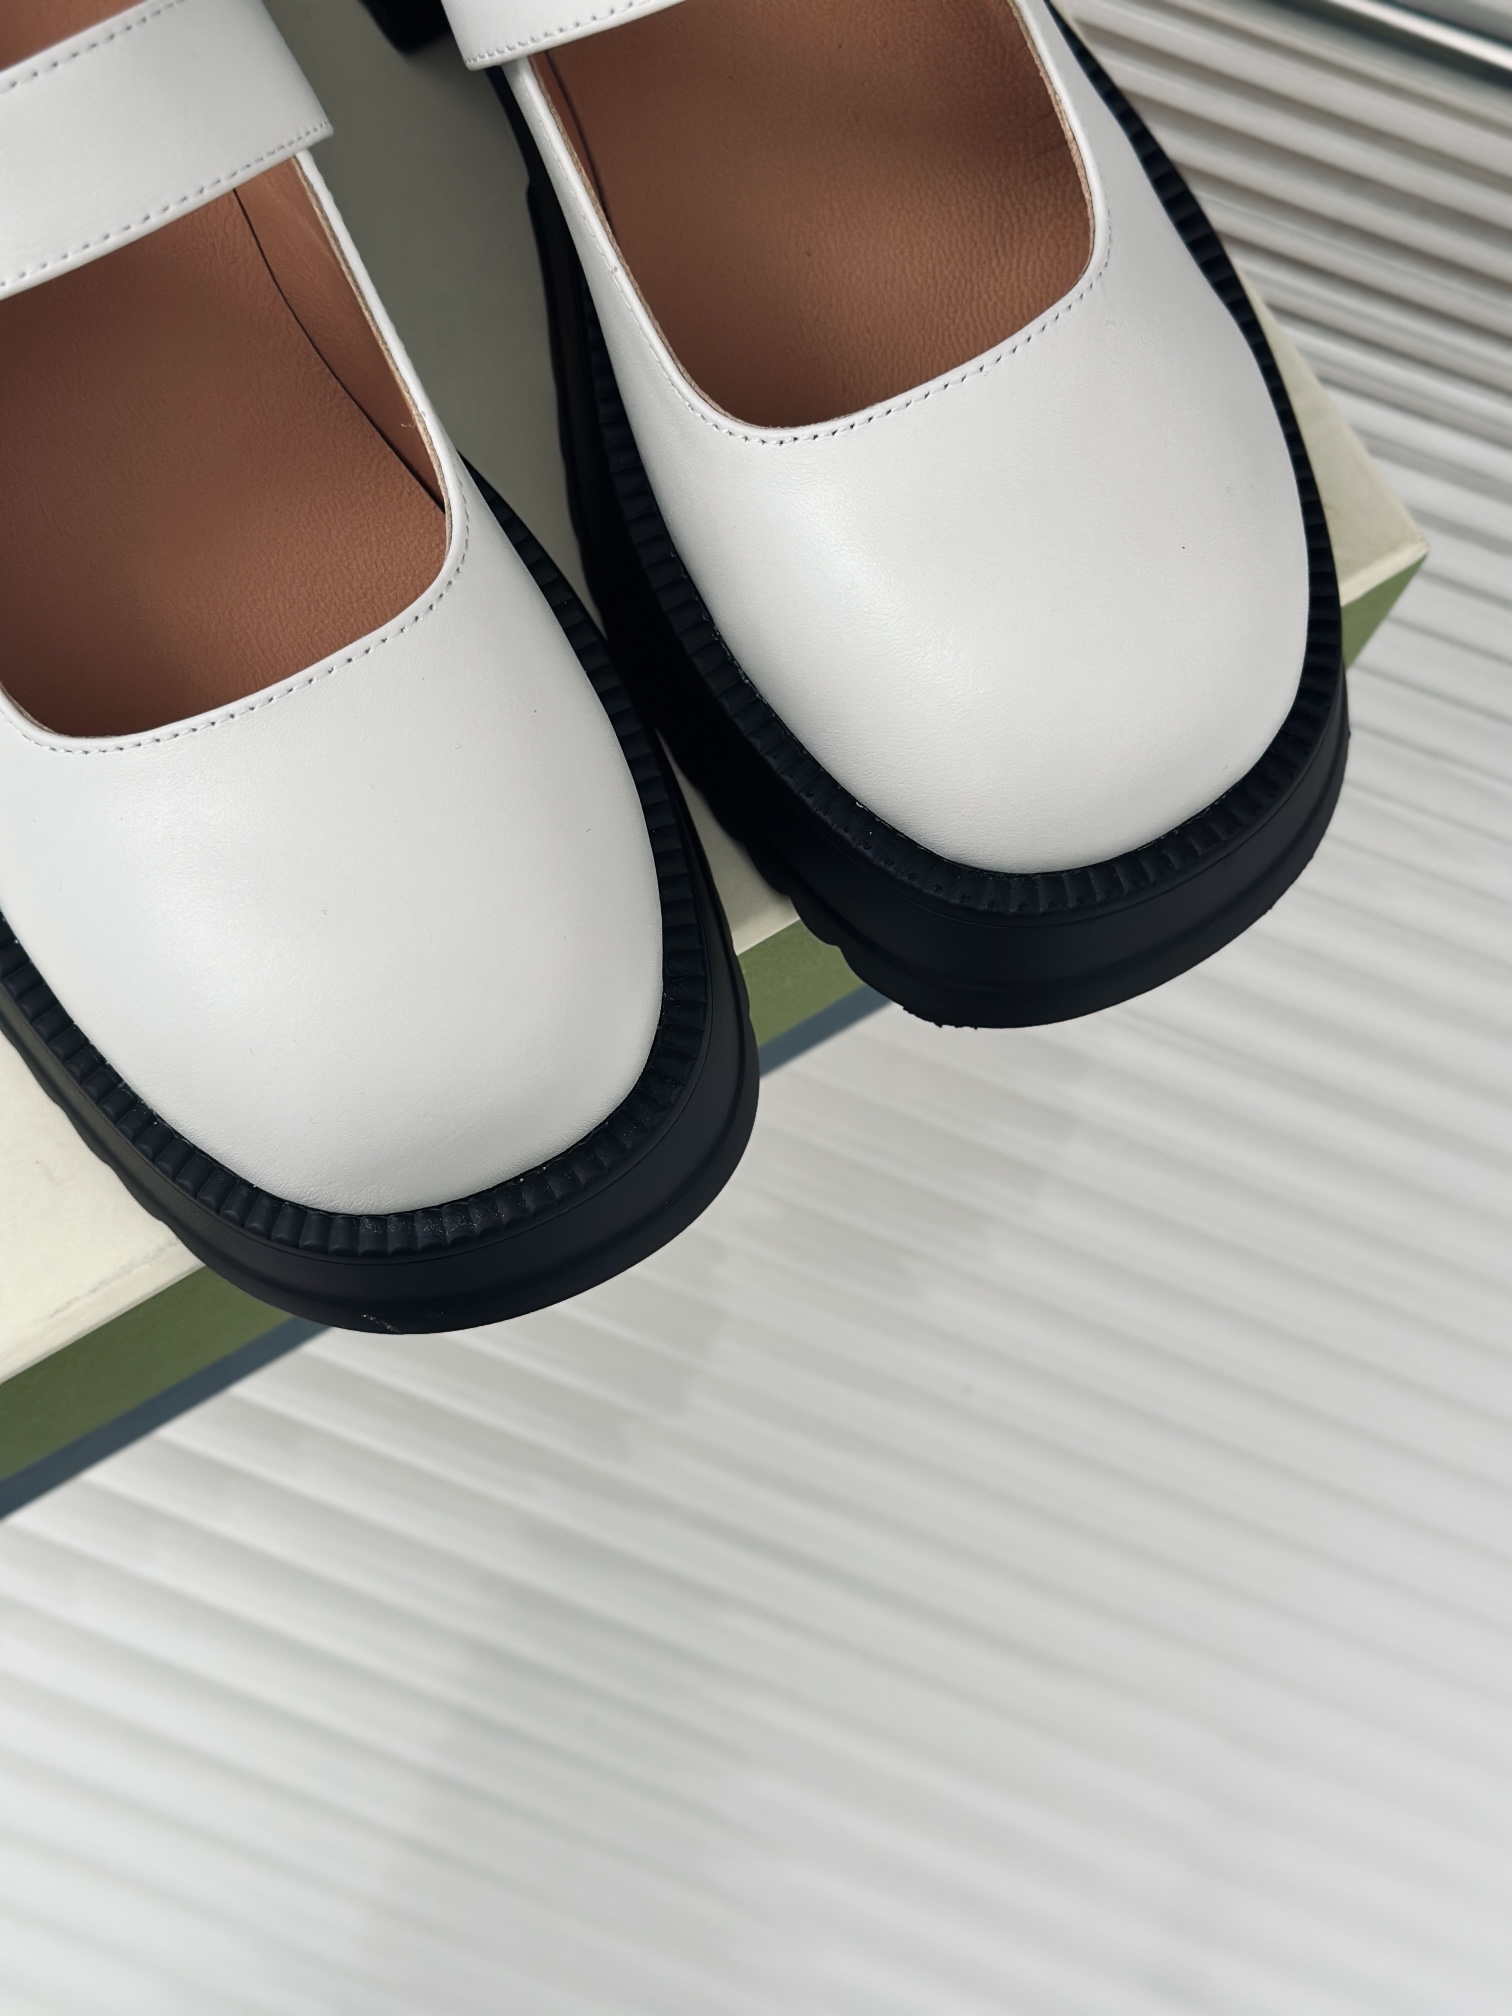 Marni玛尼23S经典四季厚底玛丽珍鞋鞋型整体特别简洁还复古配色干净不过时上脚有多舒服谁穿谁知道超级百